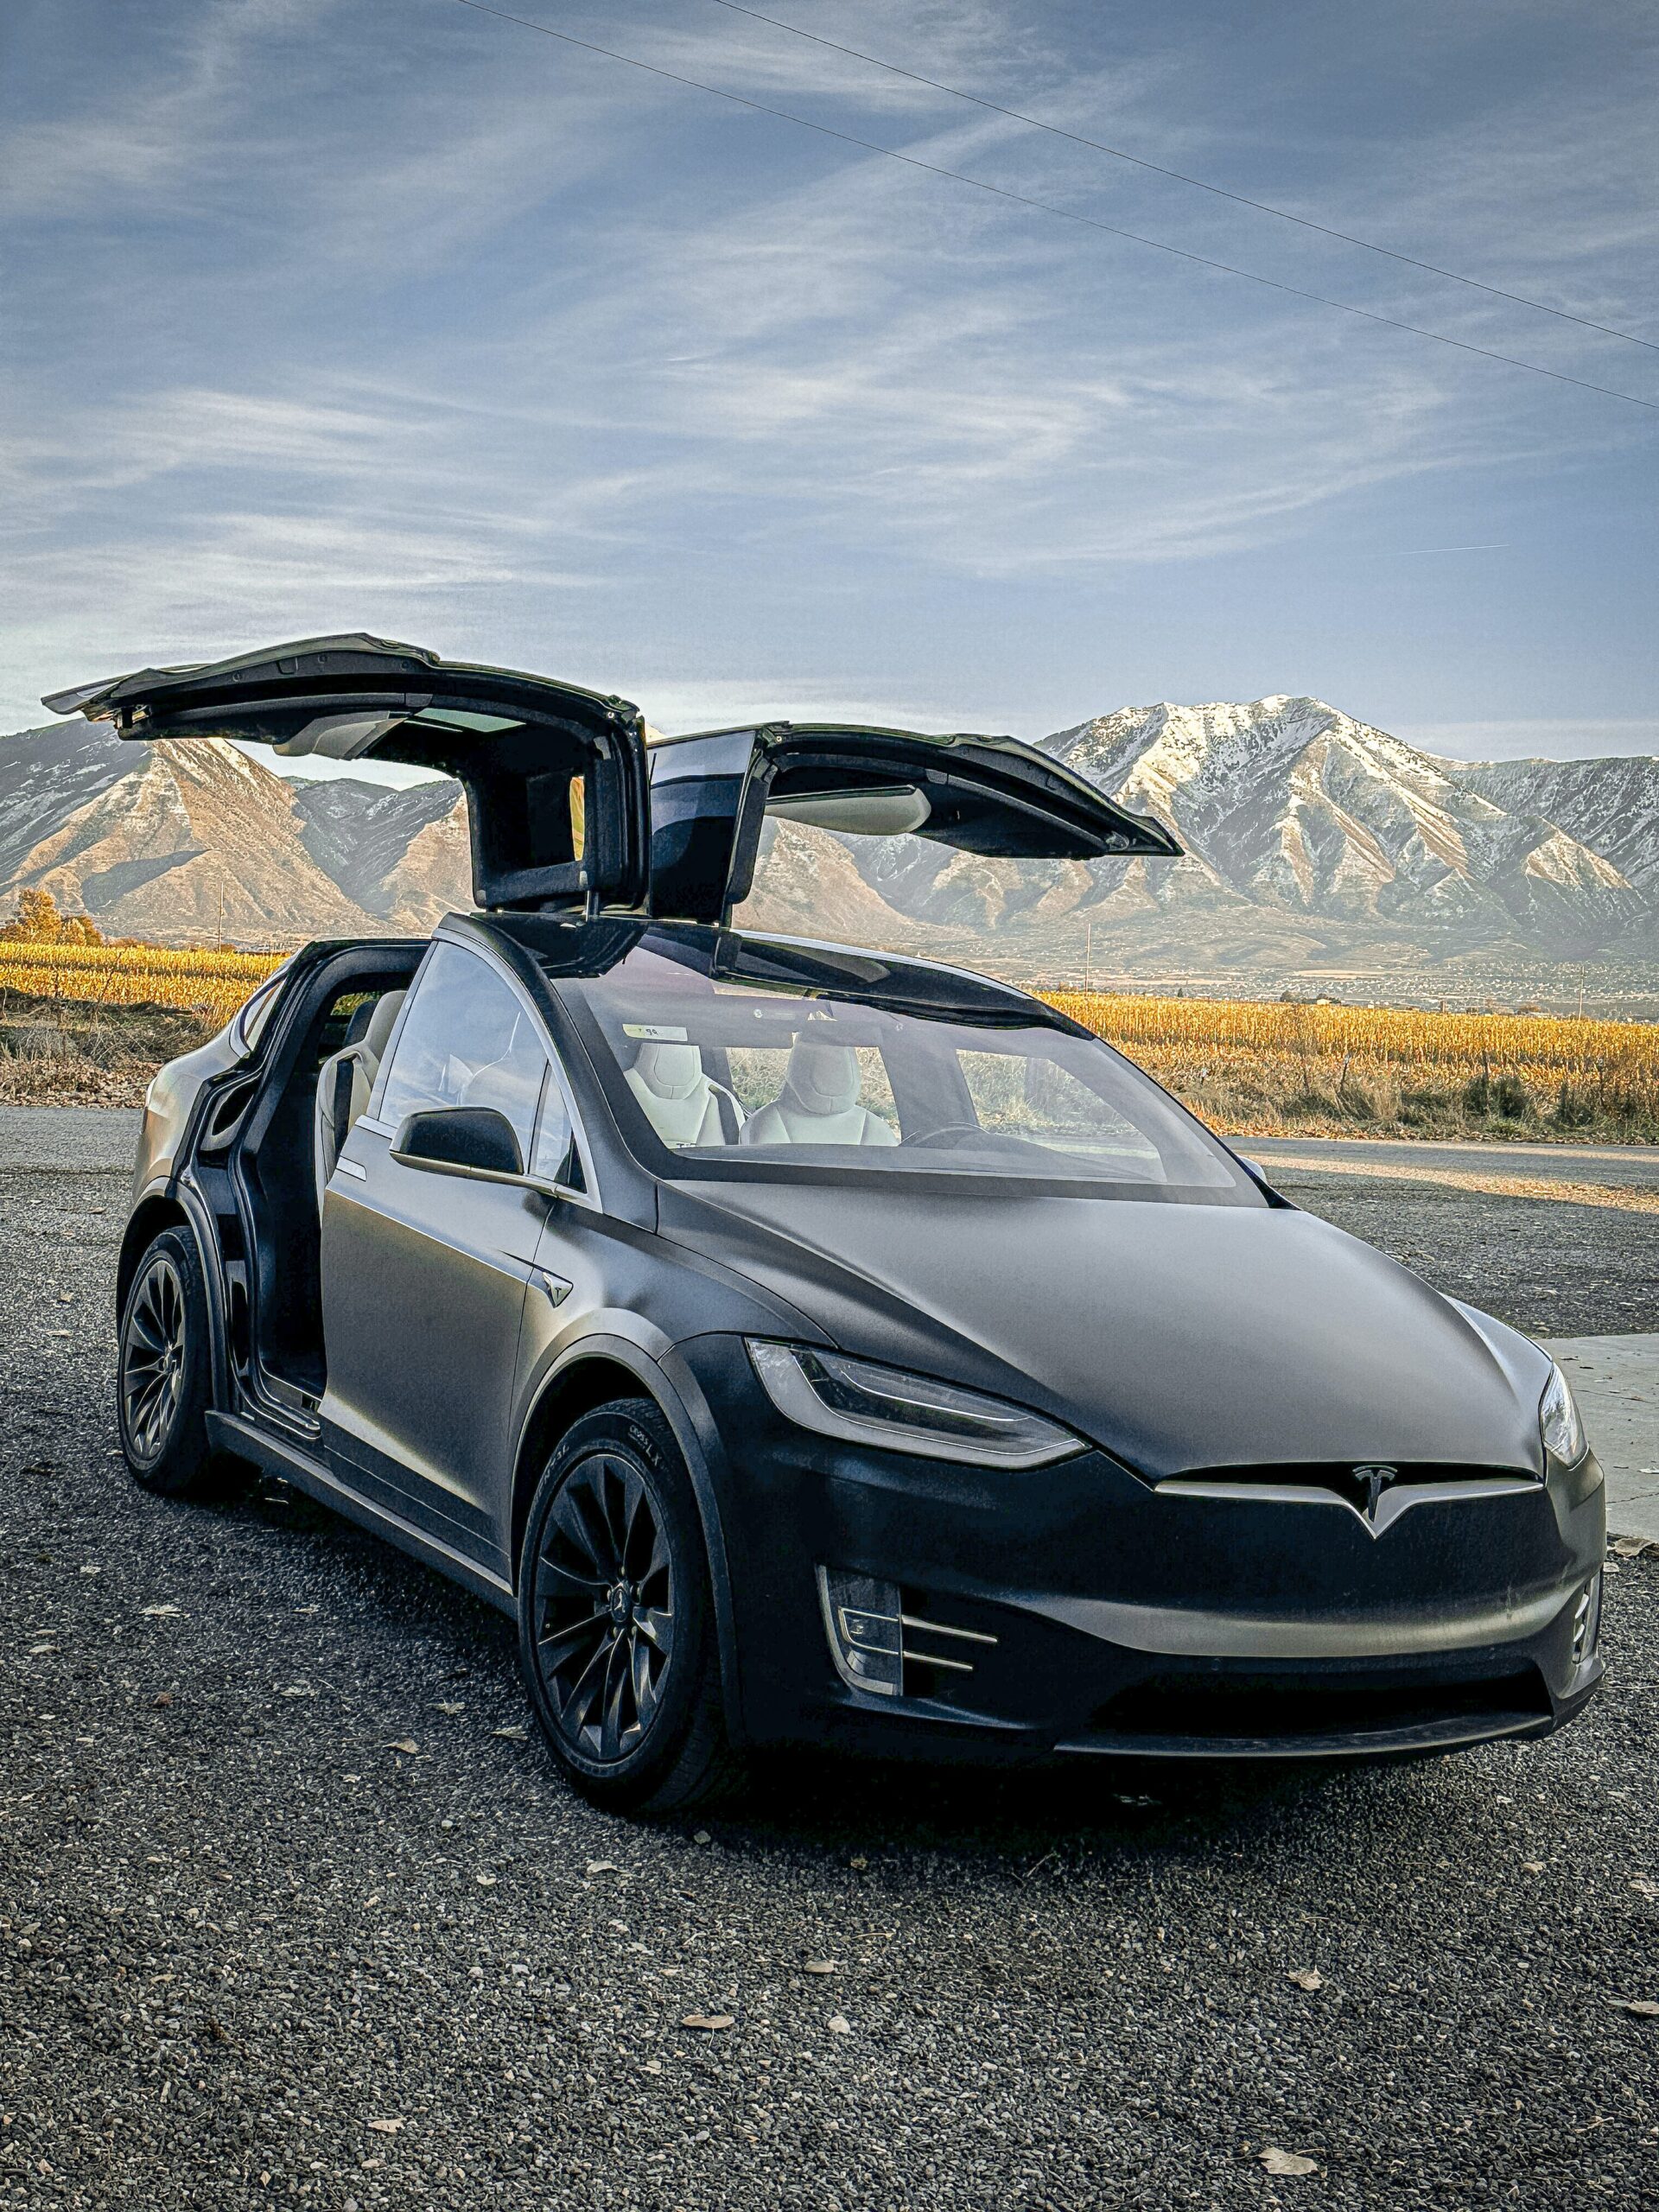 Which Electric Car Hire To Prefer – Tesla Model S Vs Tesla Model X